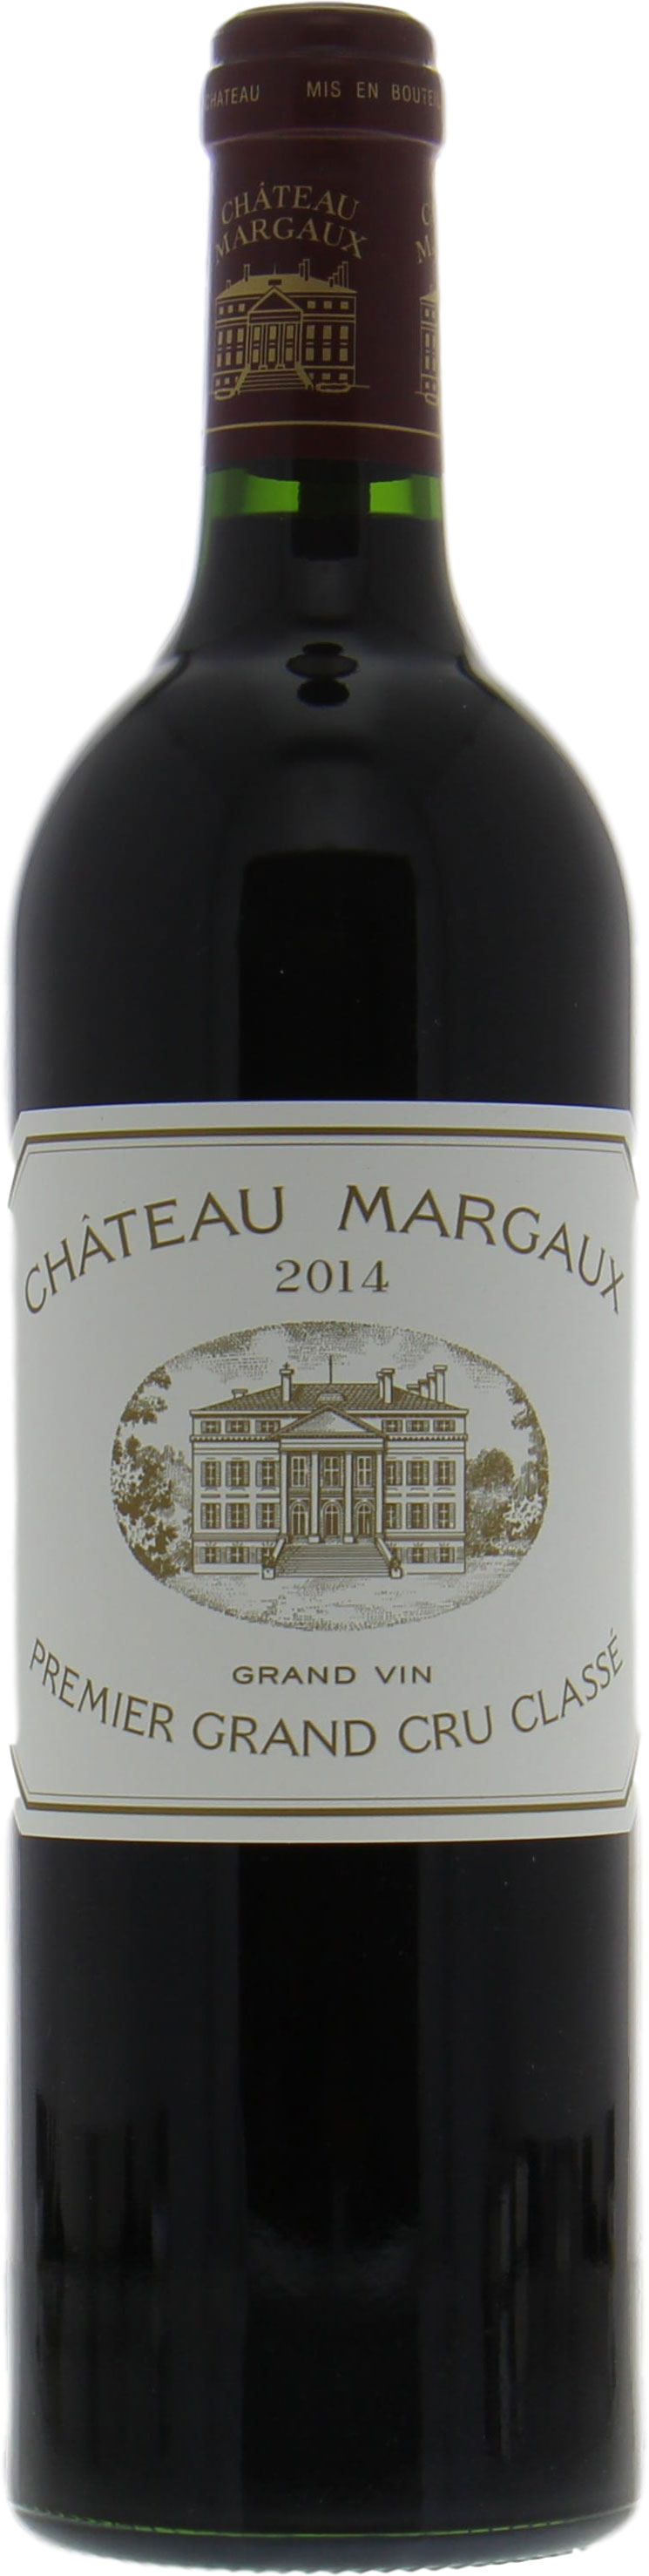 Chateau Margaux - Chateau Margaux 2014 Perfect